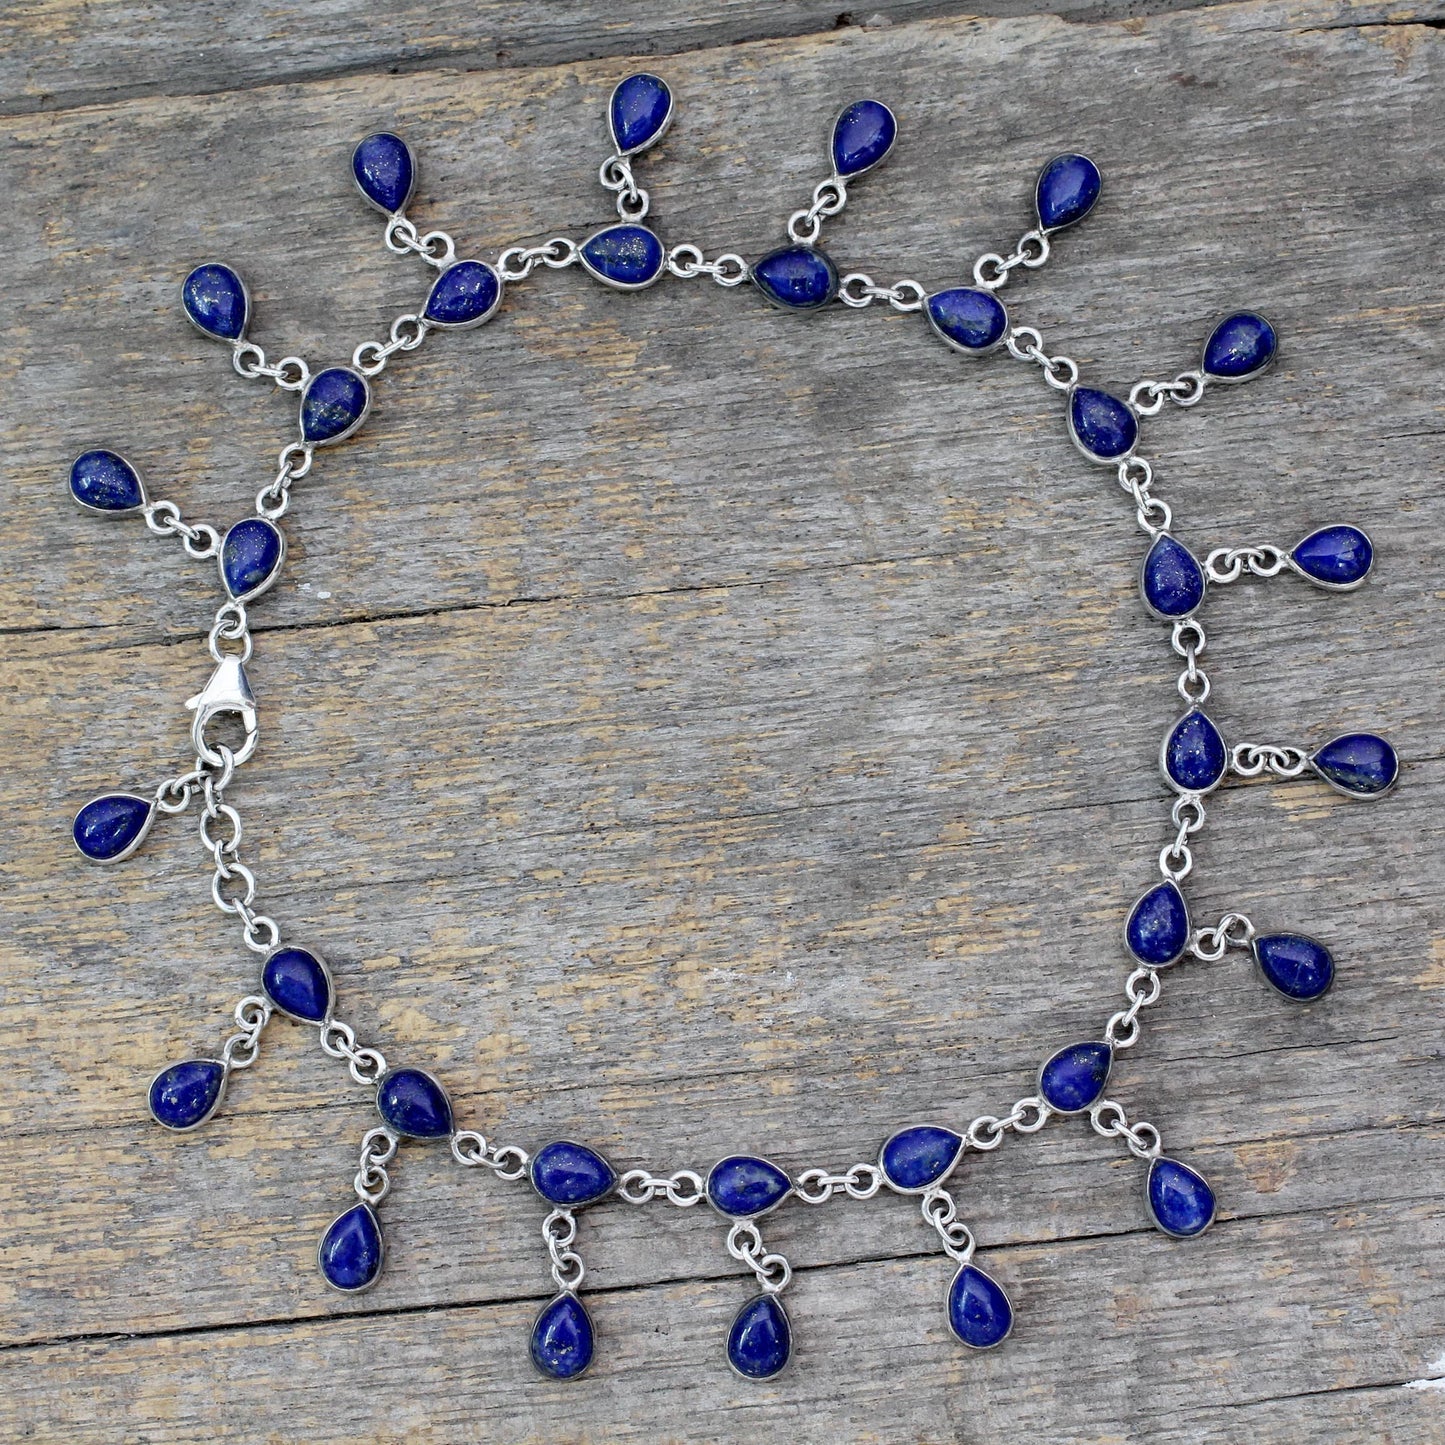 Royal Dewdrops Lapis Lazuli & Silver Anklet